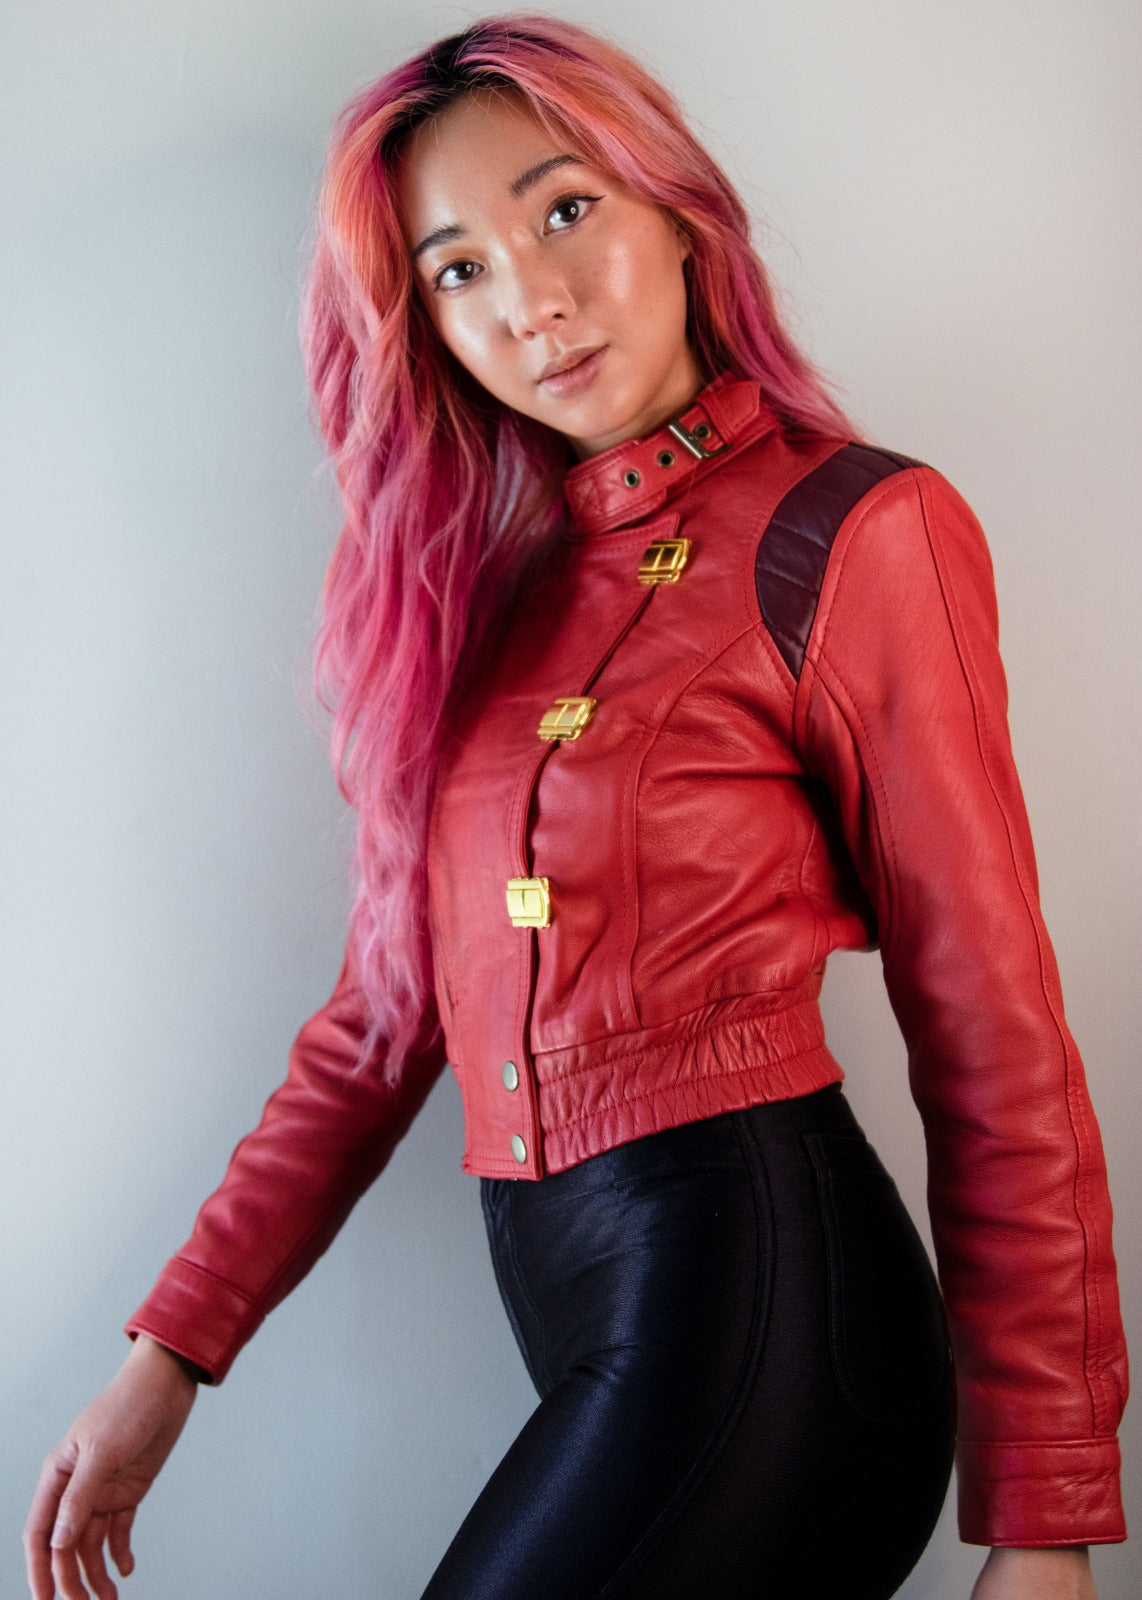 Womens Akira Red Leather Jacket Anime kaneda Crop Top Zip